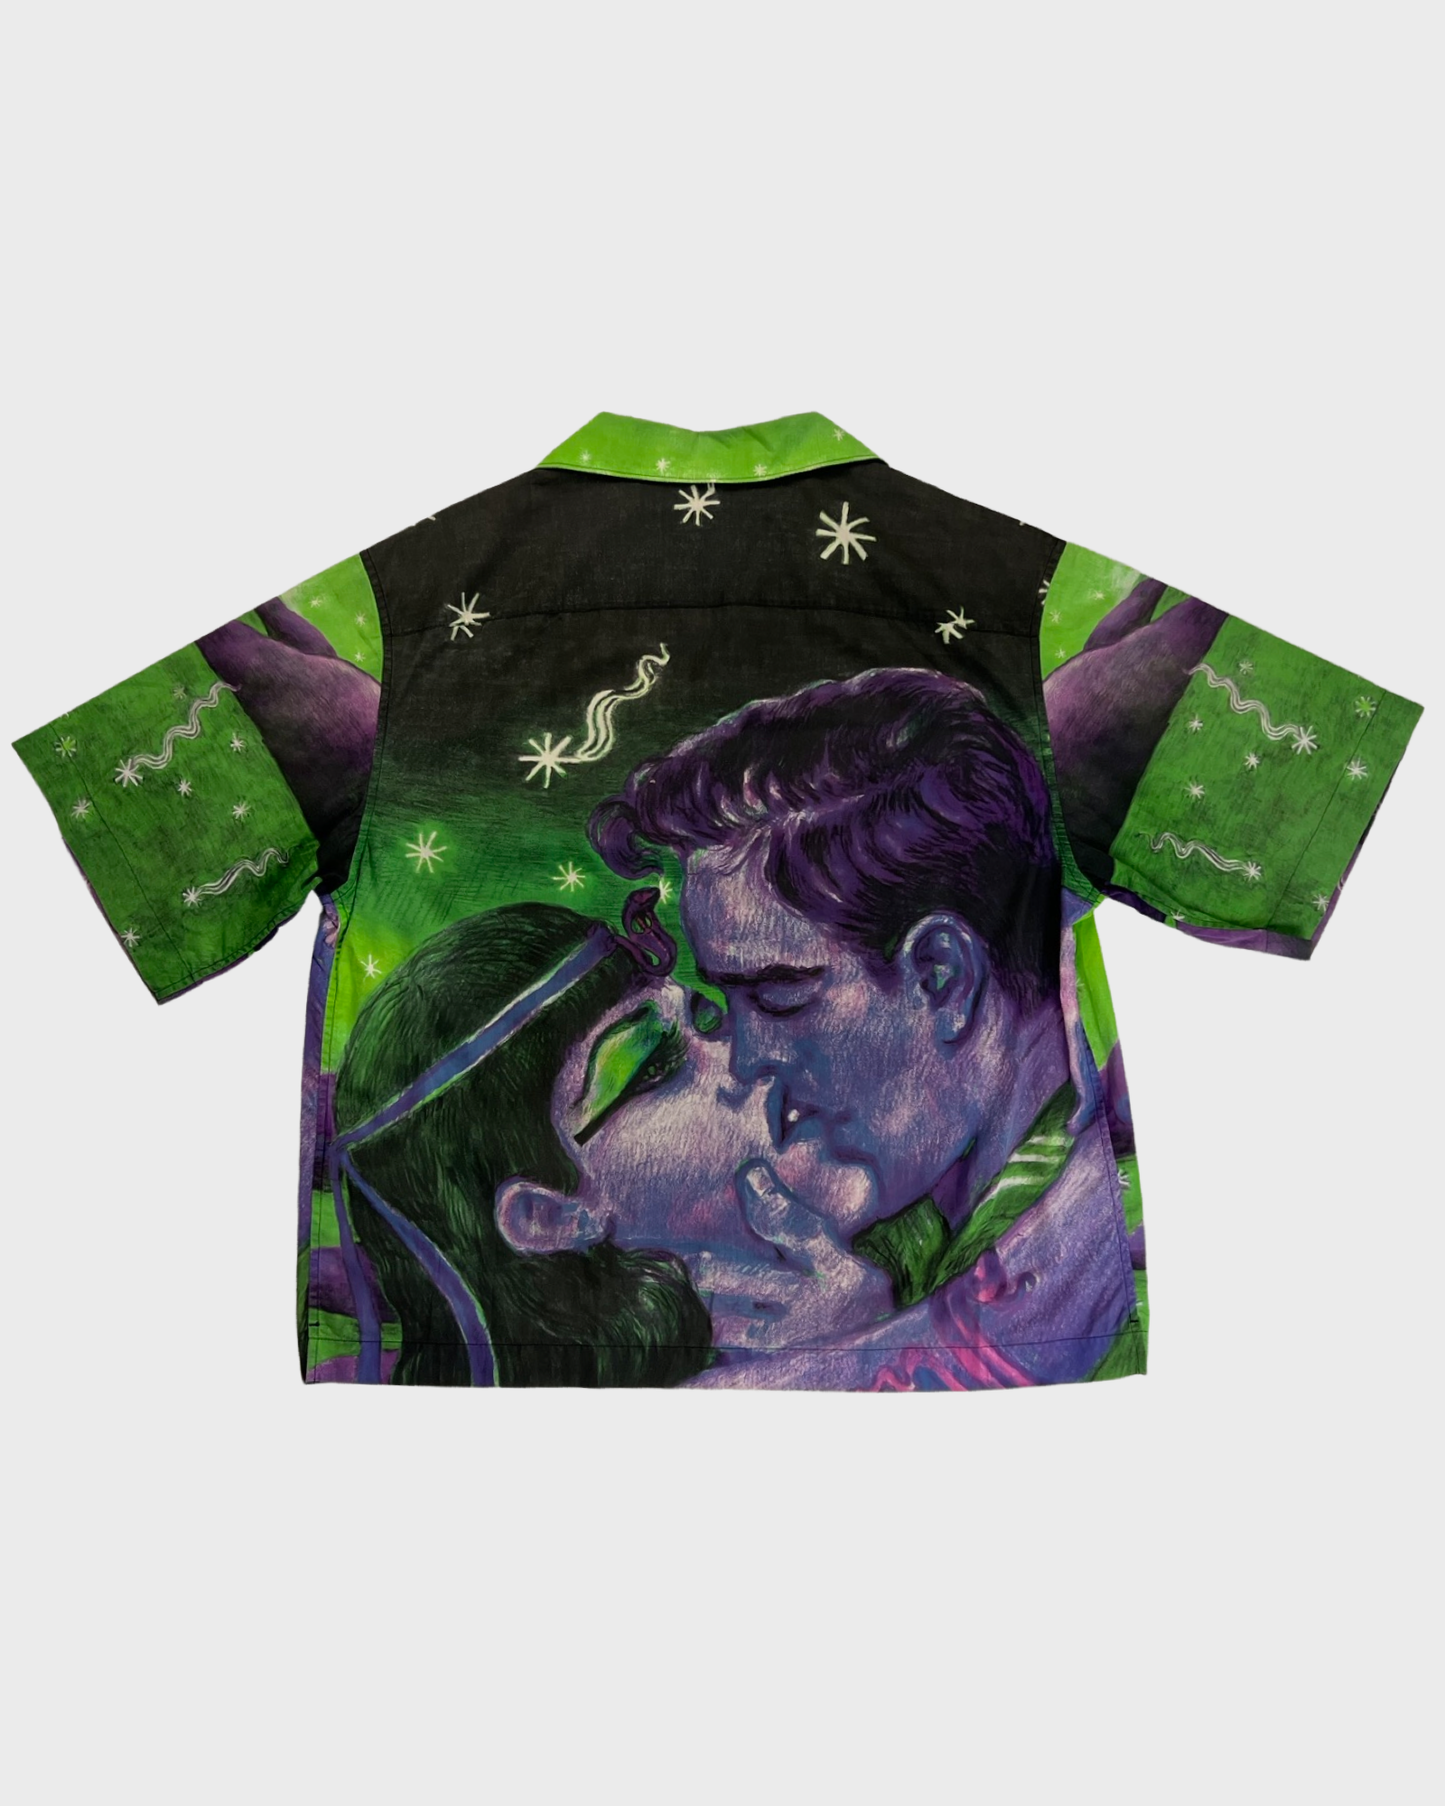 Prada AW18 impossible true love kiss Shirt purple green SZ:M